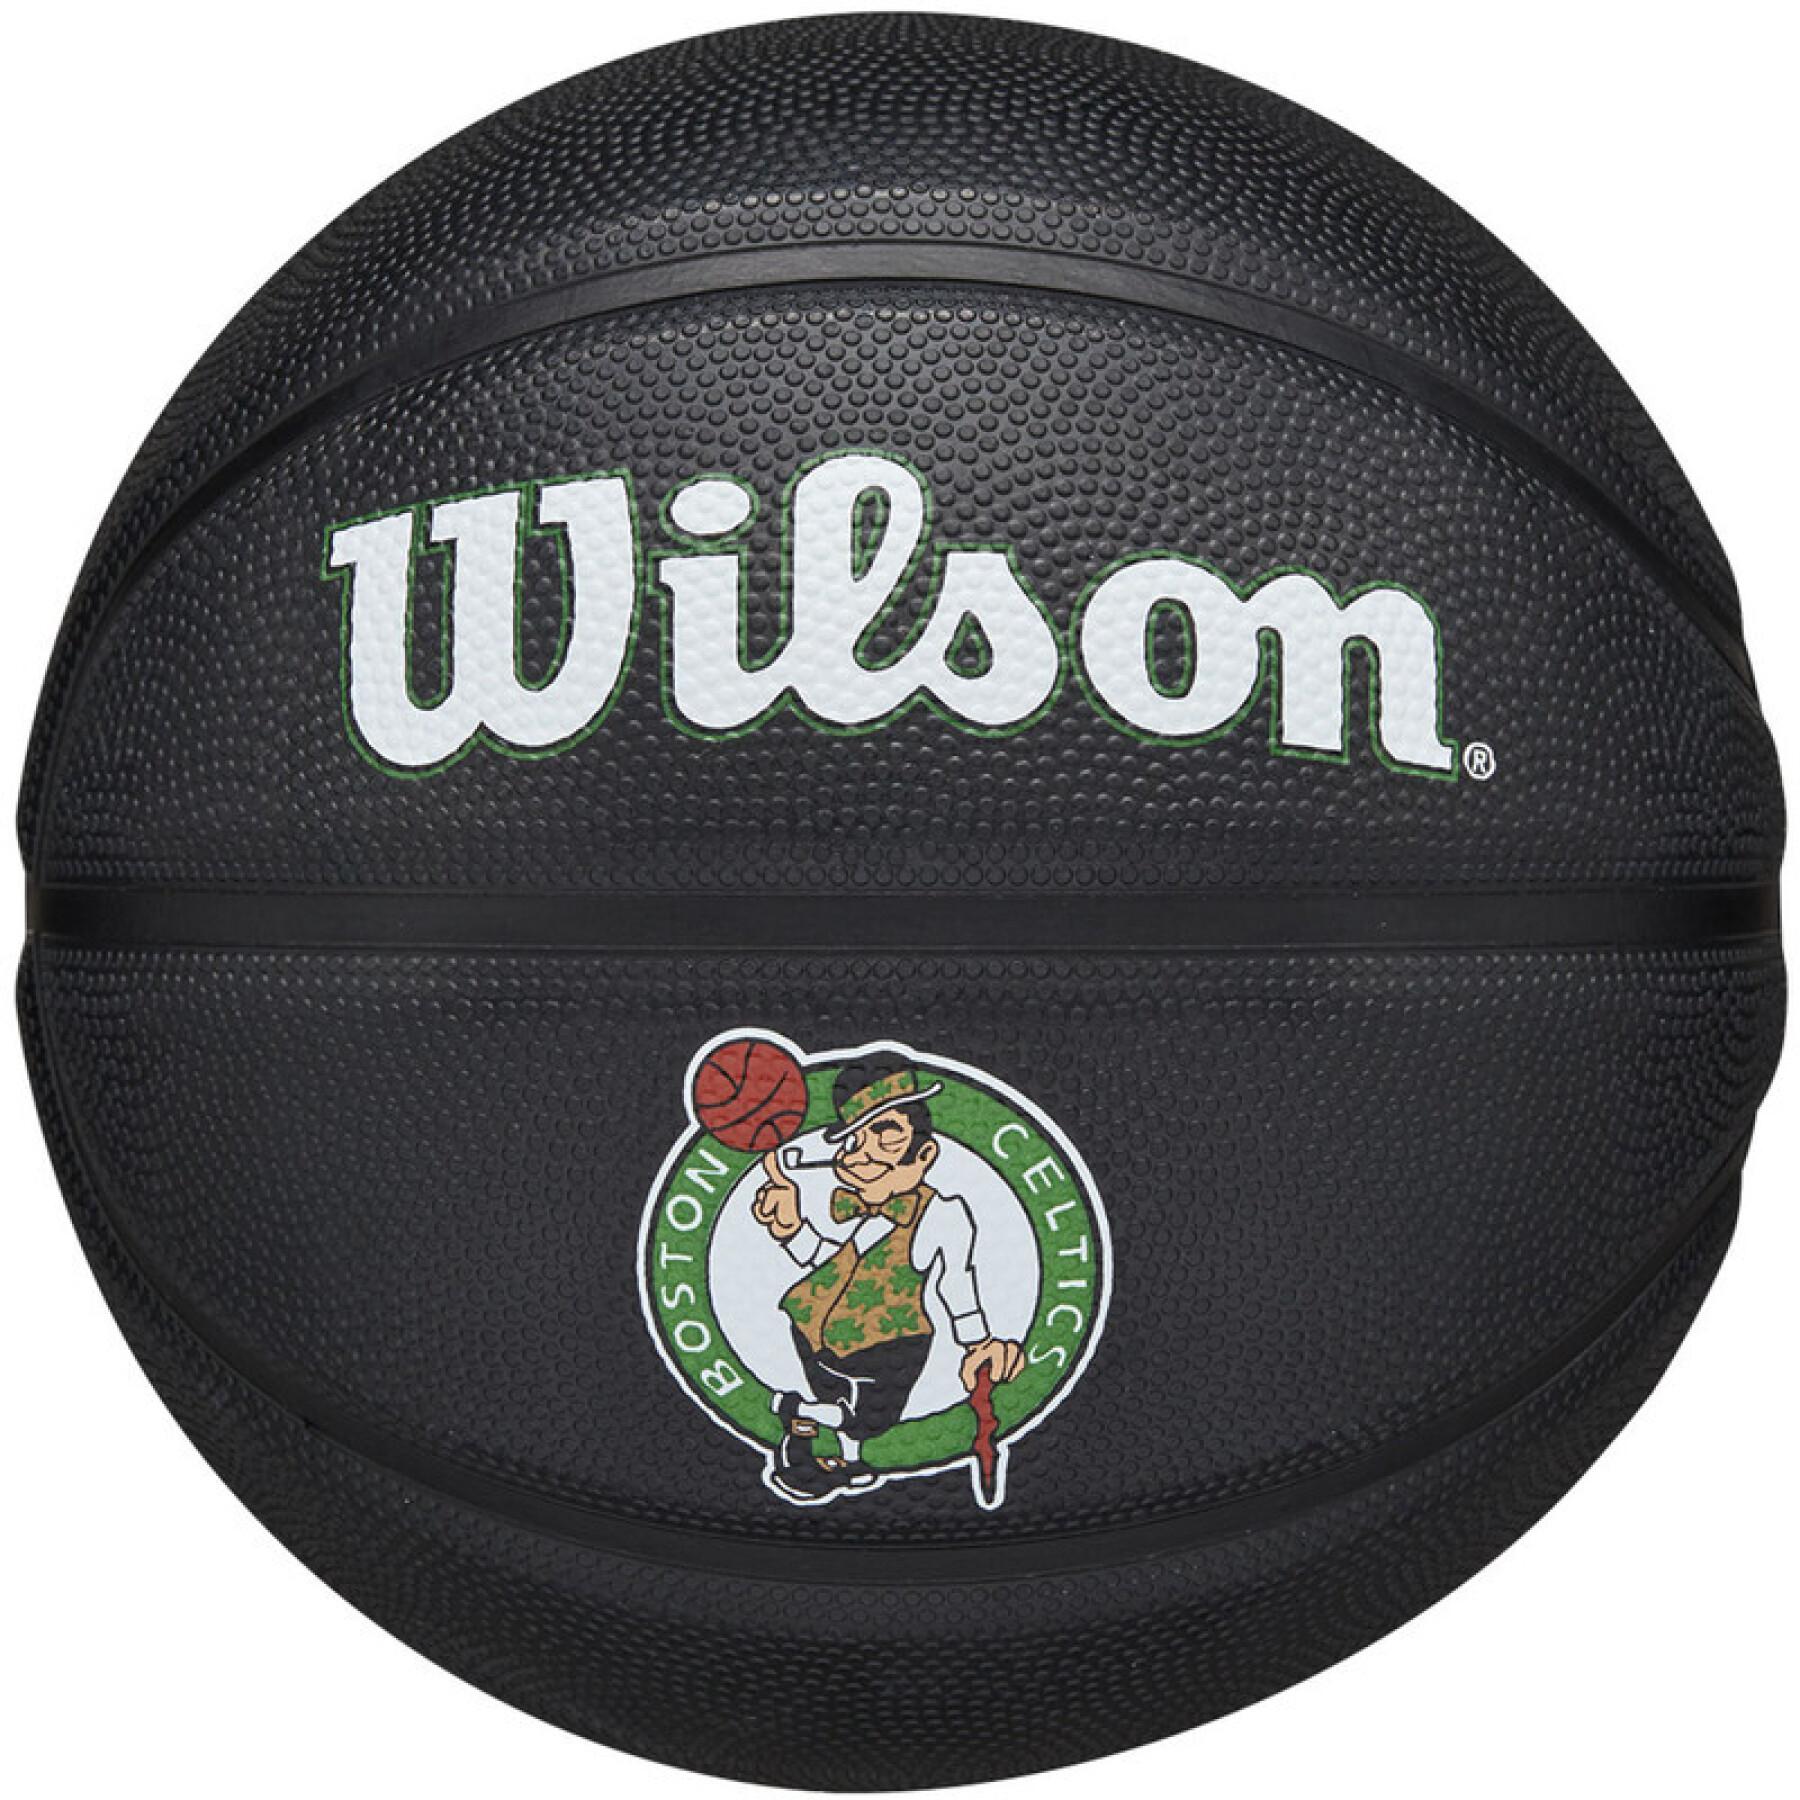 Mini Bola nba Boston Celtics